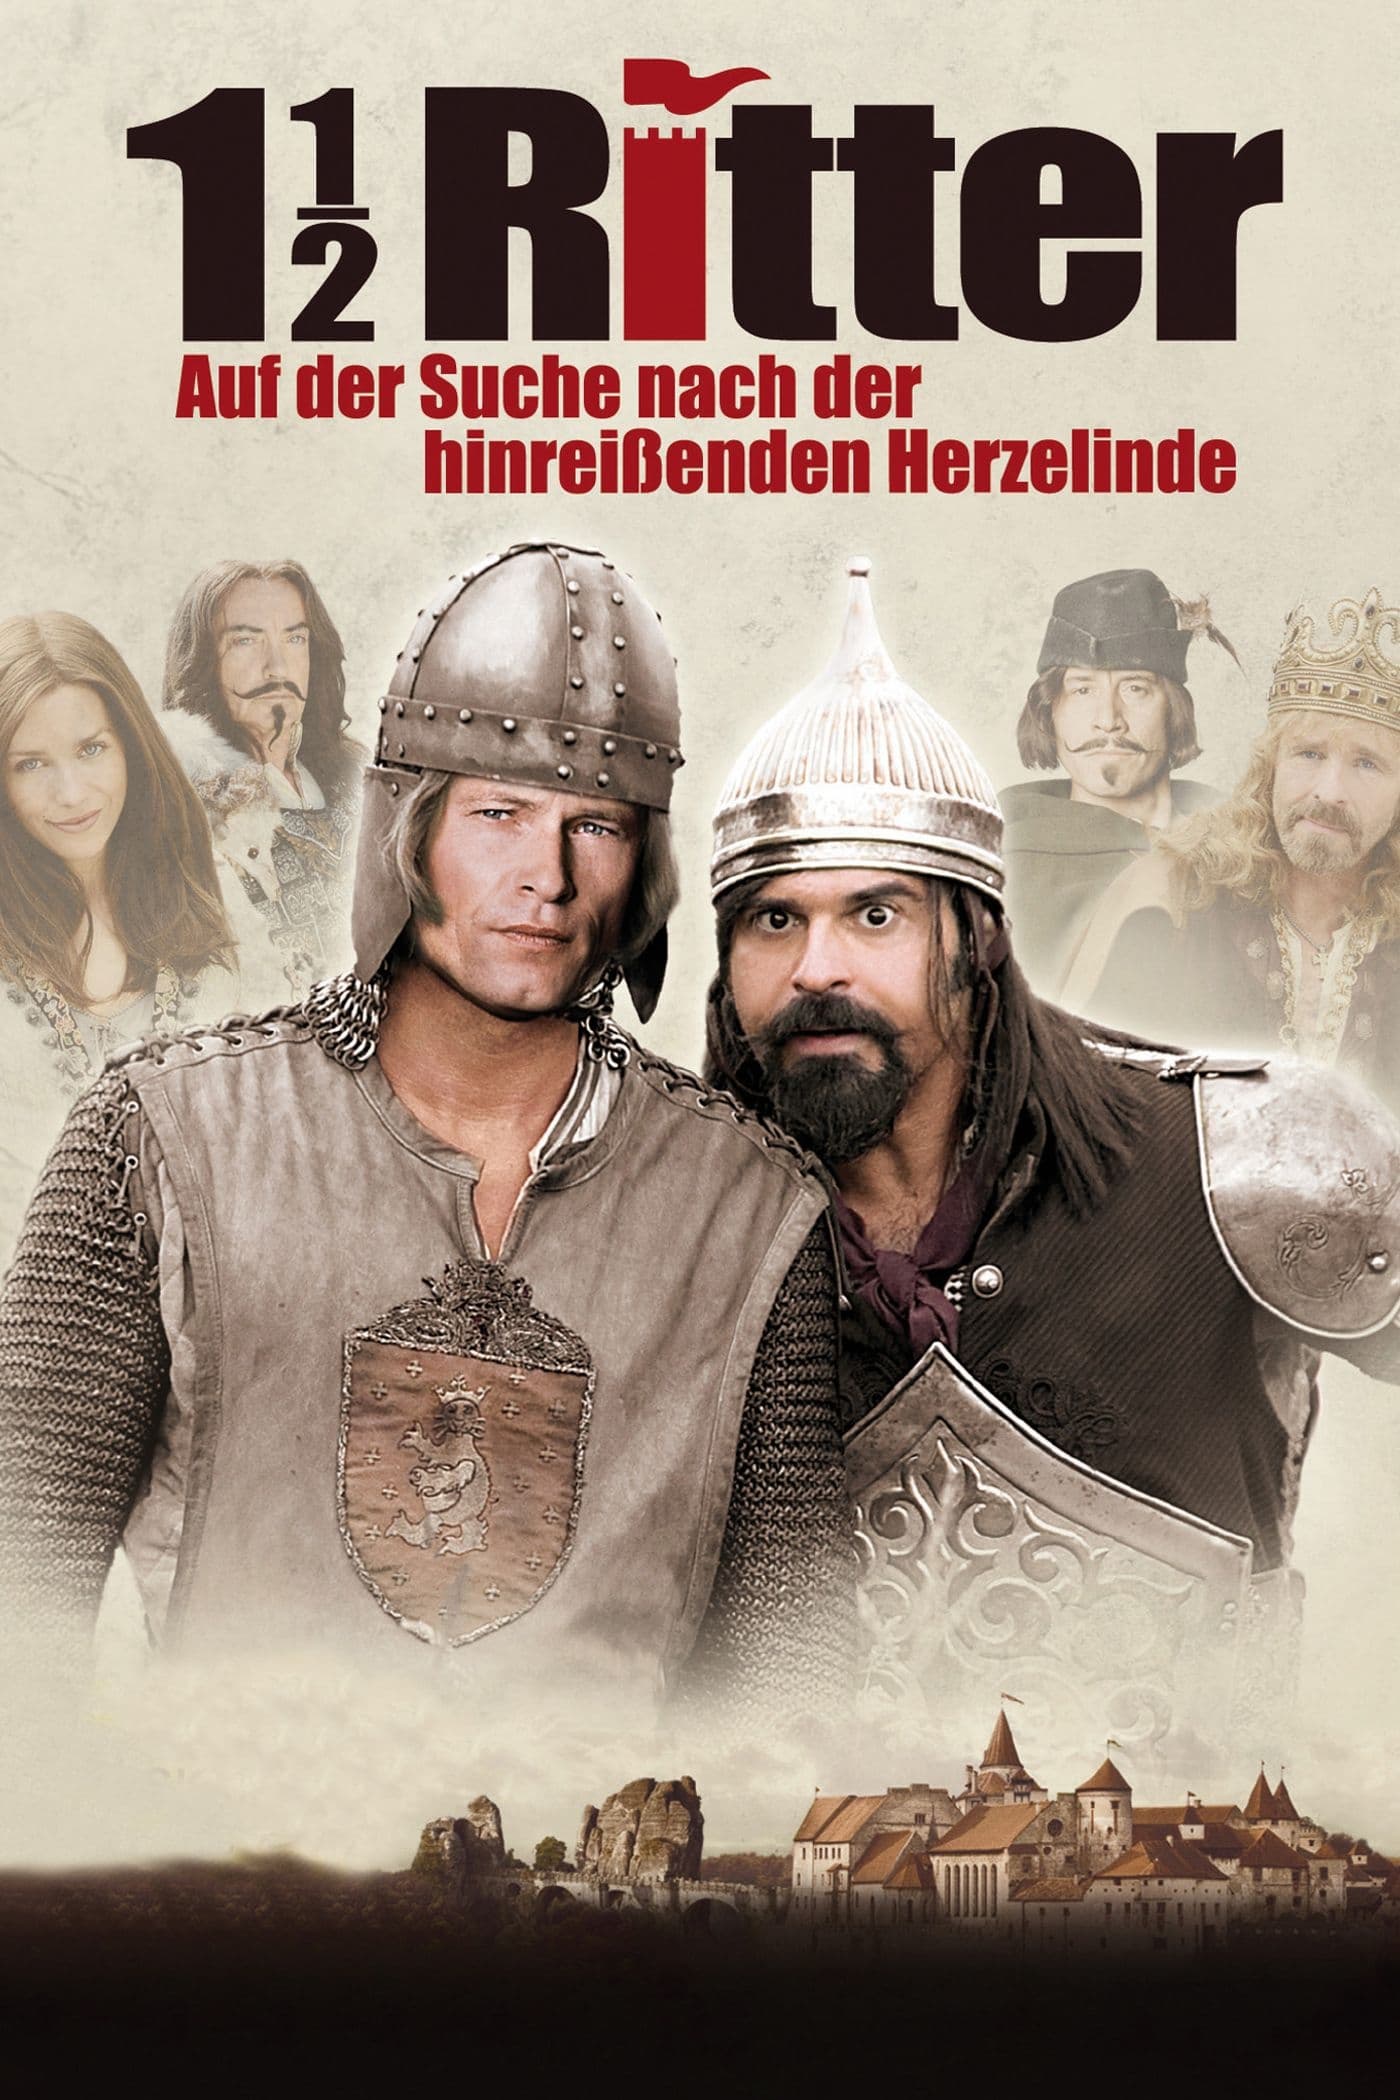 1½ Knights - In Search of the Ravishing Princess Herzelinde